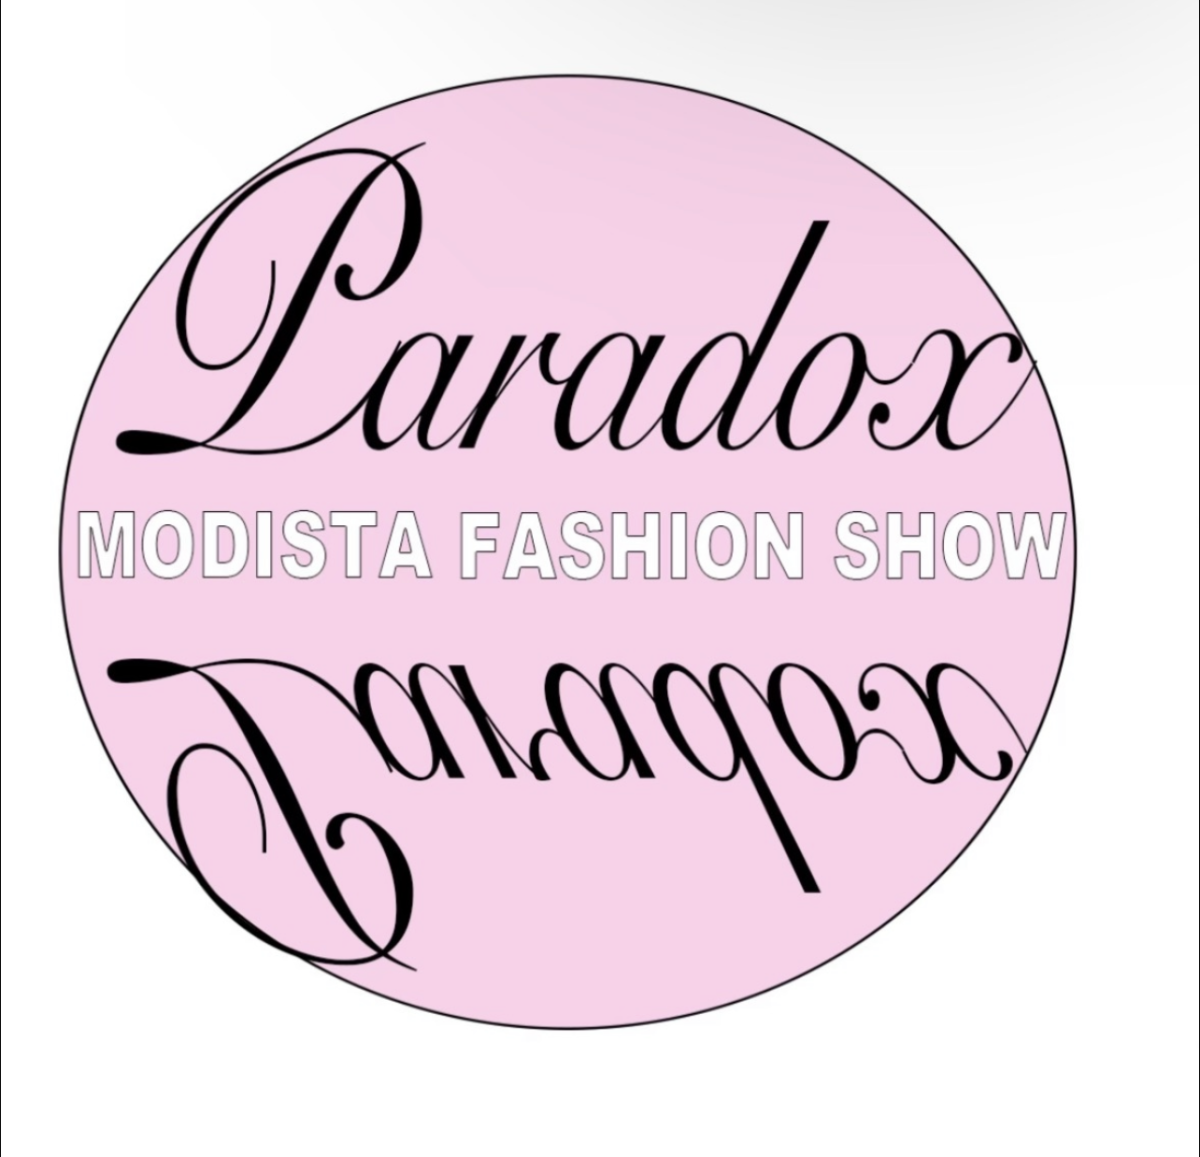 Fashion group Modista announces ‘paradox’ theme for this year’s show